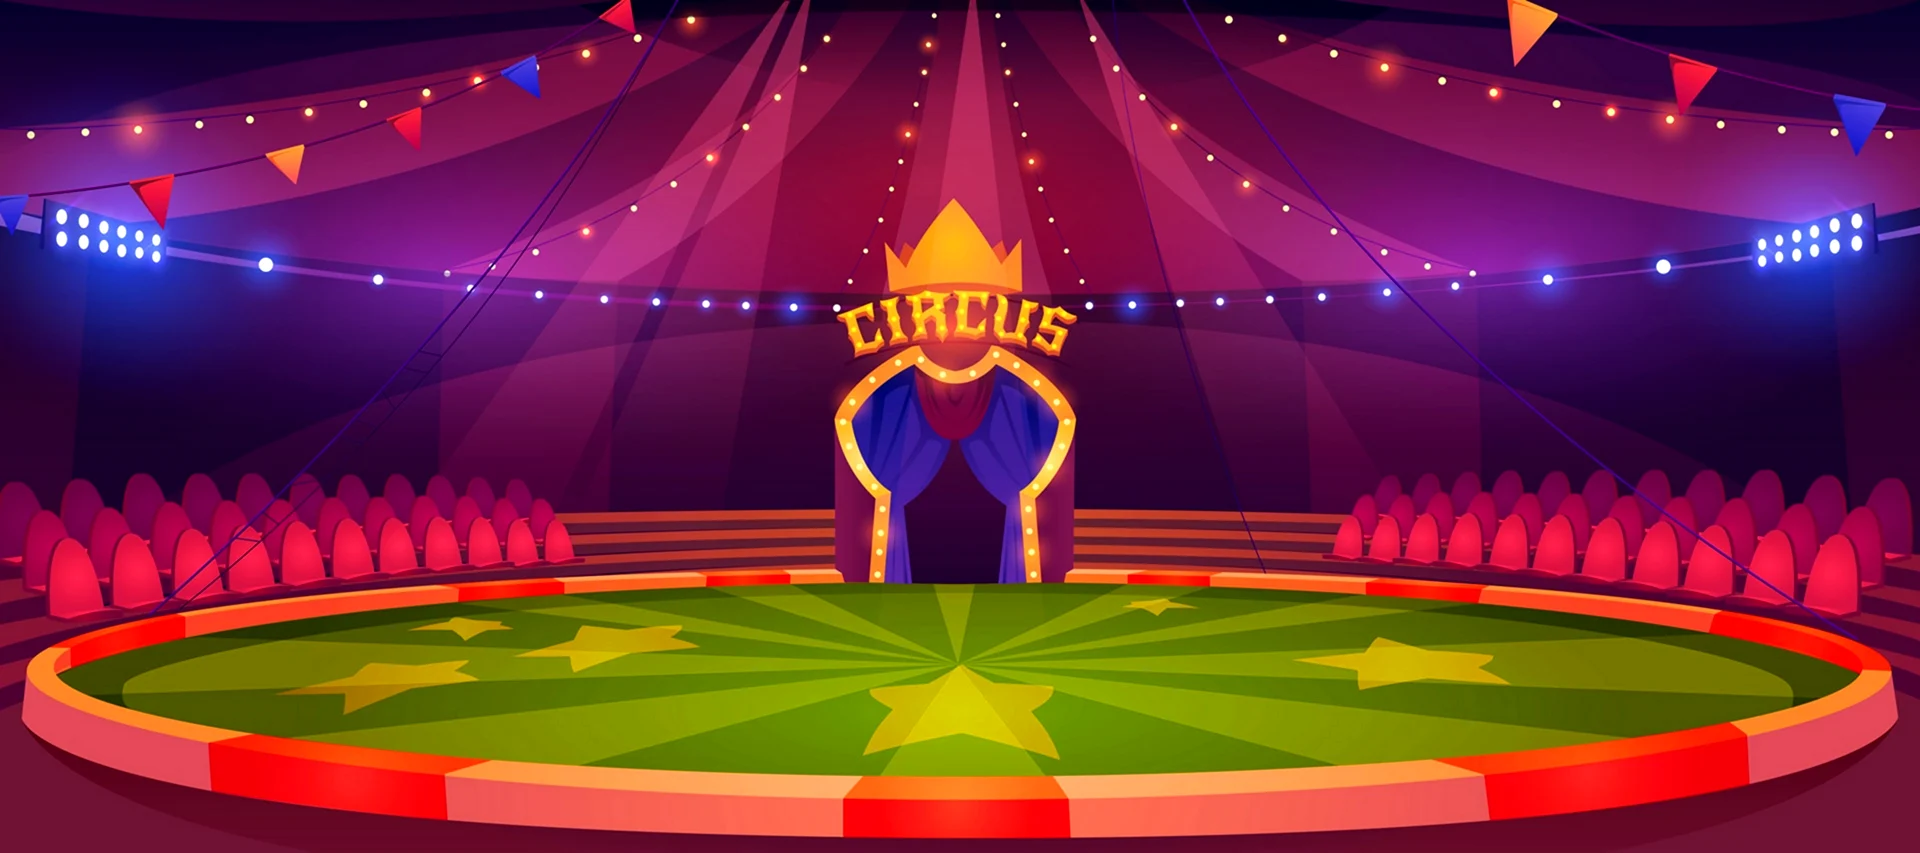 Арена цирка вектор